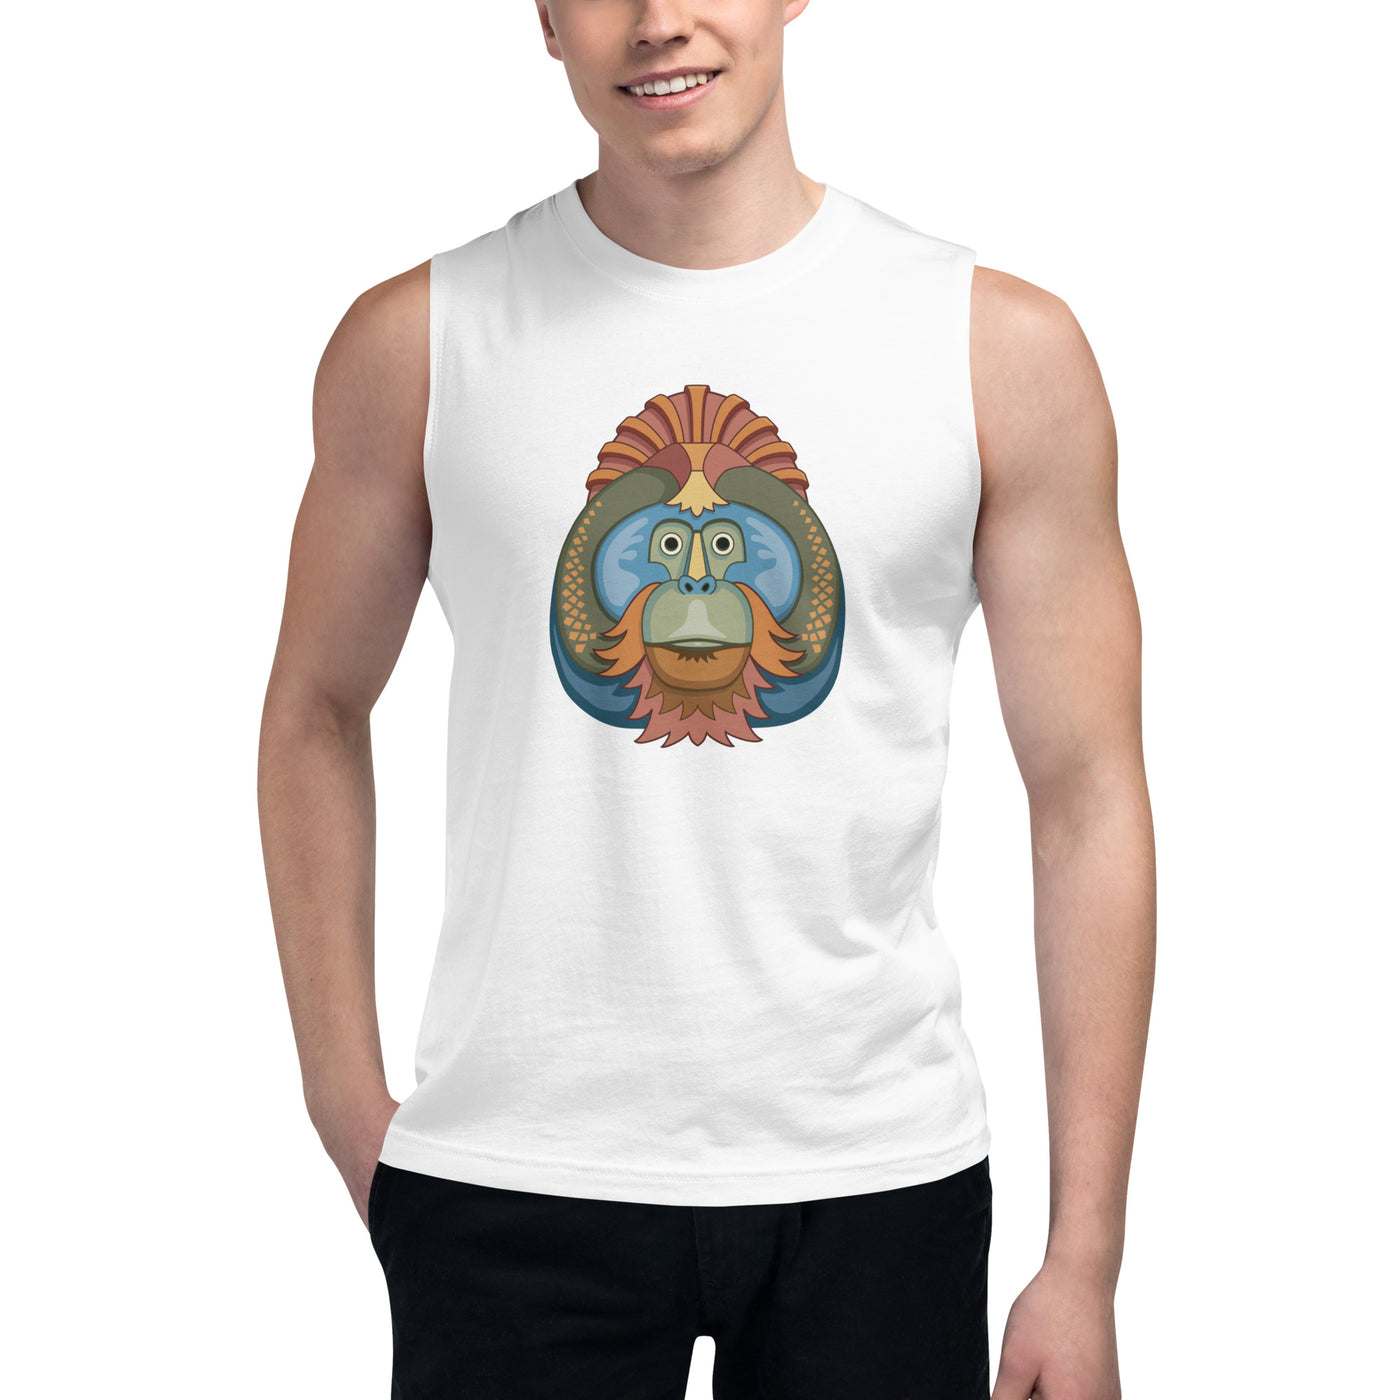 Orangutan - Muscle Shirt